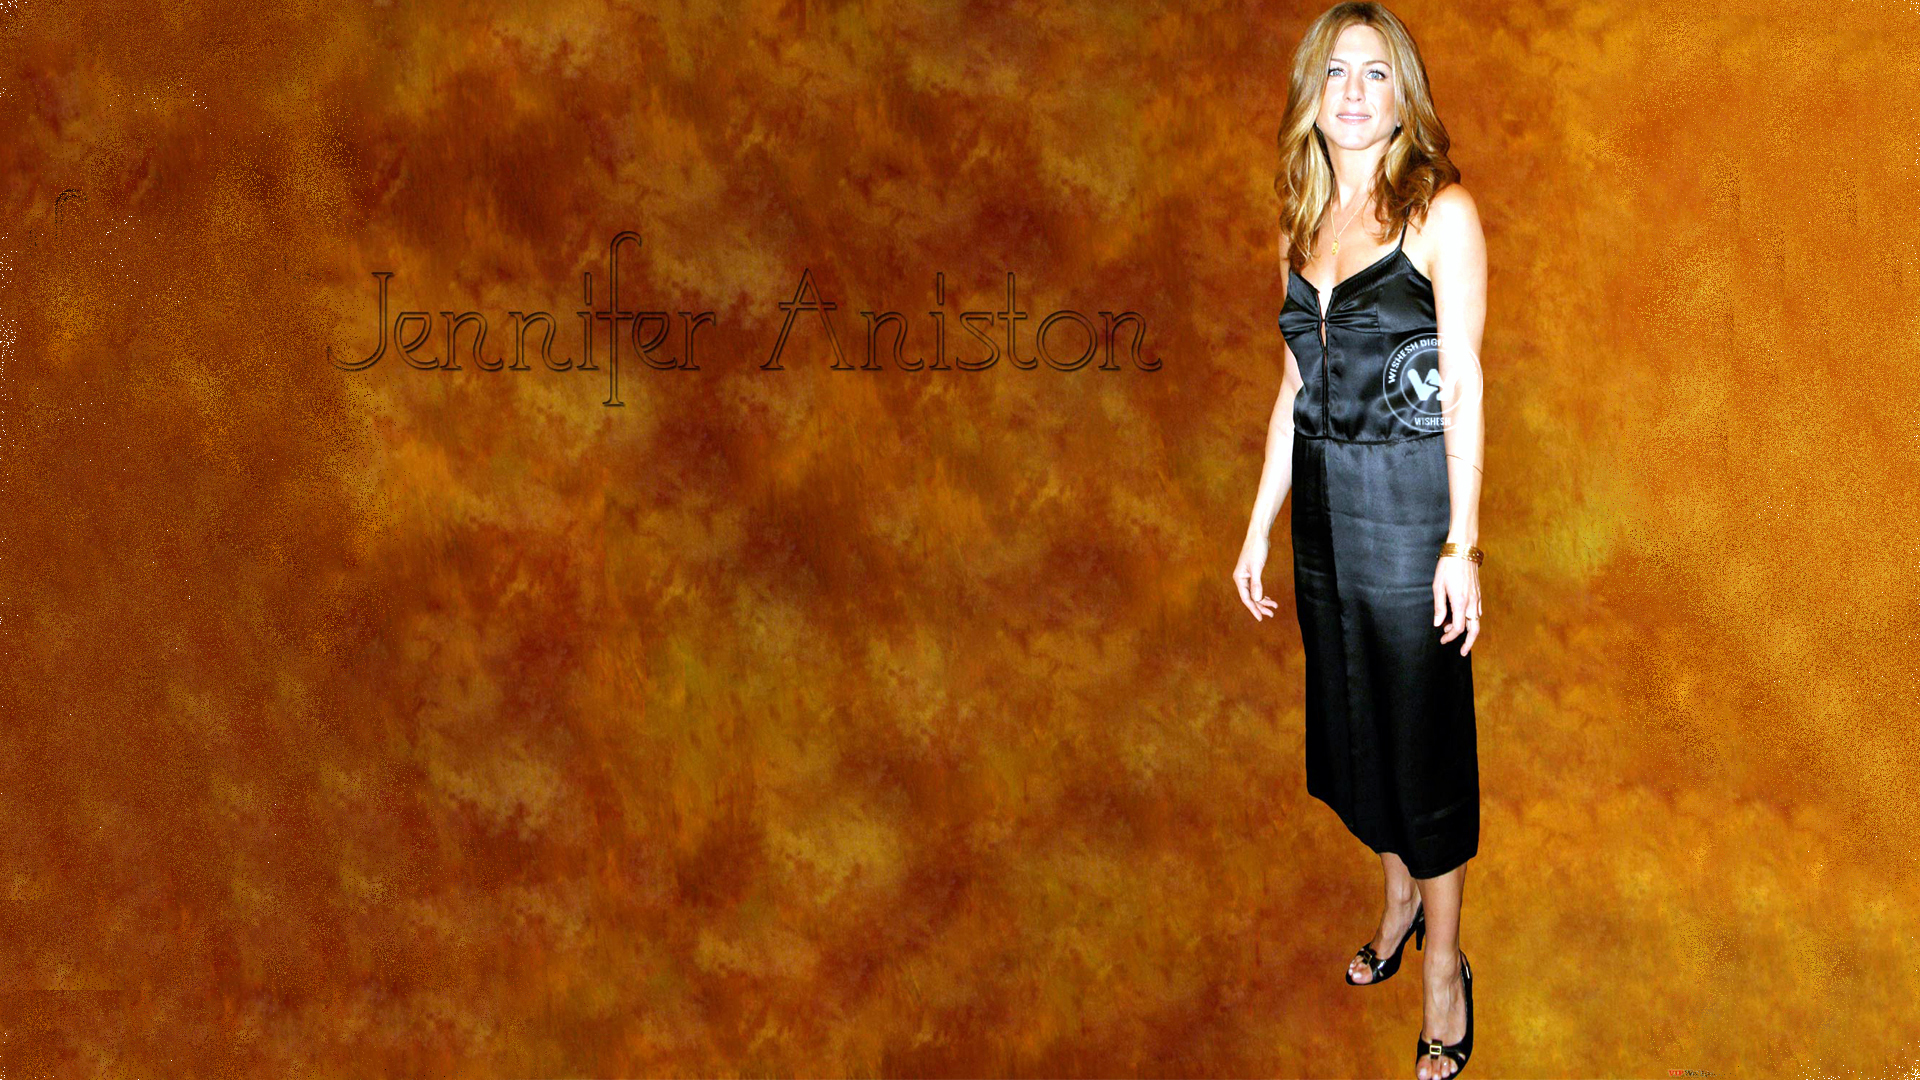 Hot Hollywood Actress Jennifer Aniston Wallpapers. | Wallpaper 8of 10 | Hot Hollywood Actress Jennifer Aniston Wallpapers. | Jennifer Aniston Hot Latest Wallpapers